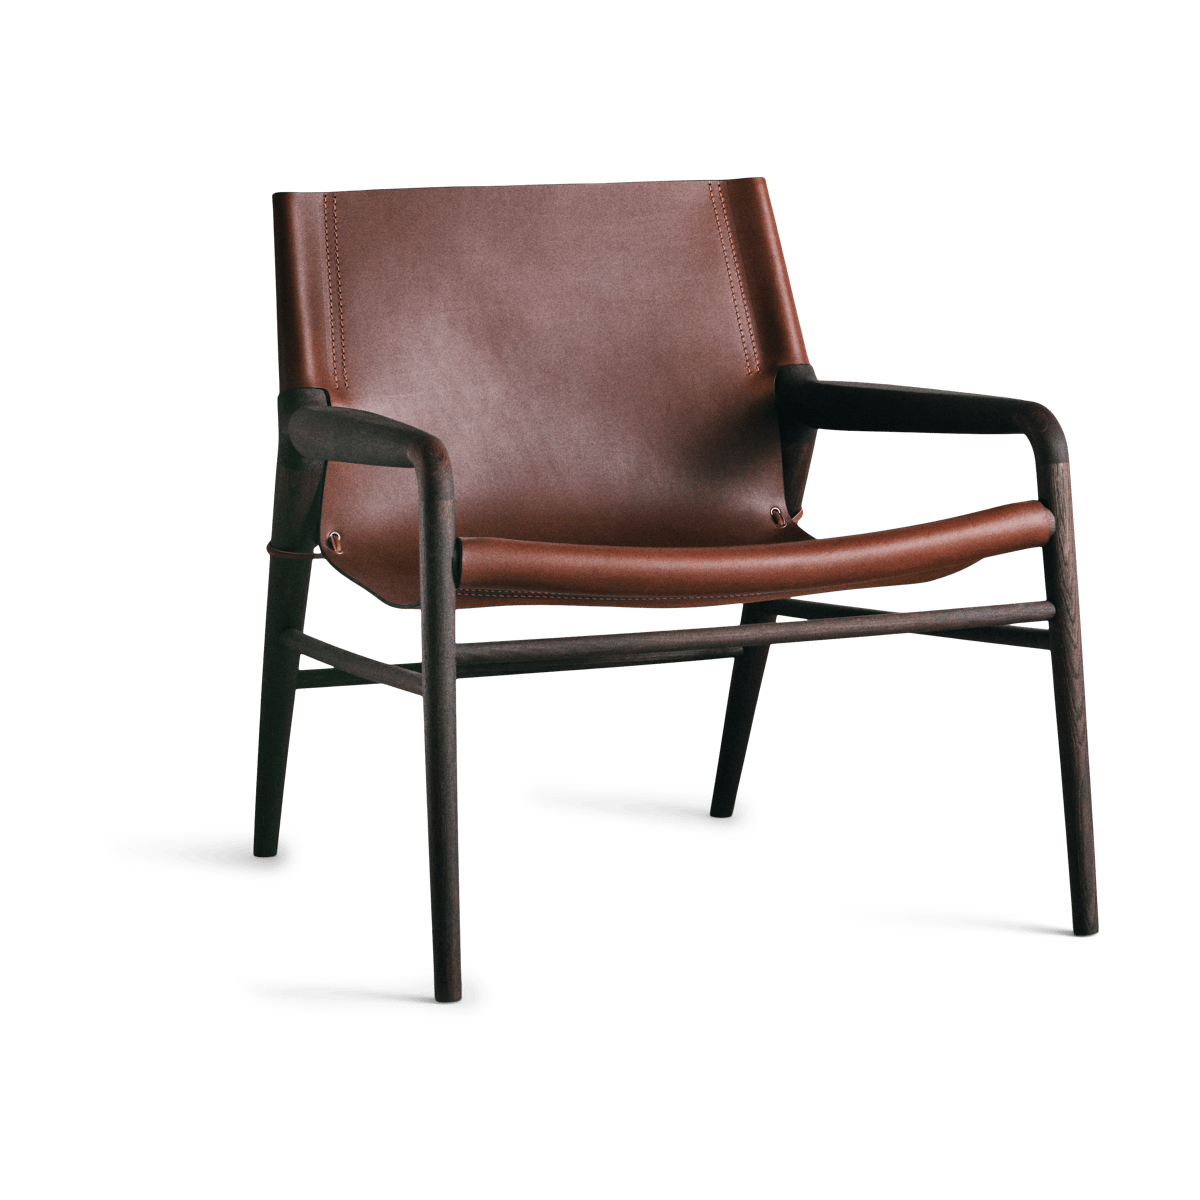 OX Denmarq Rama Chair fauteuil  smoked oak  frame Cognac